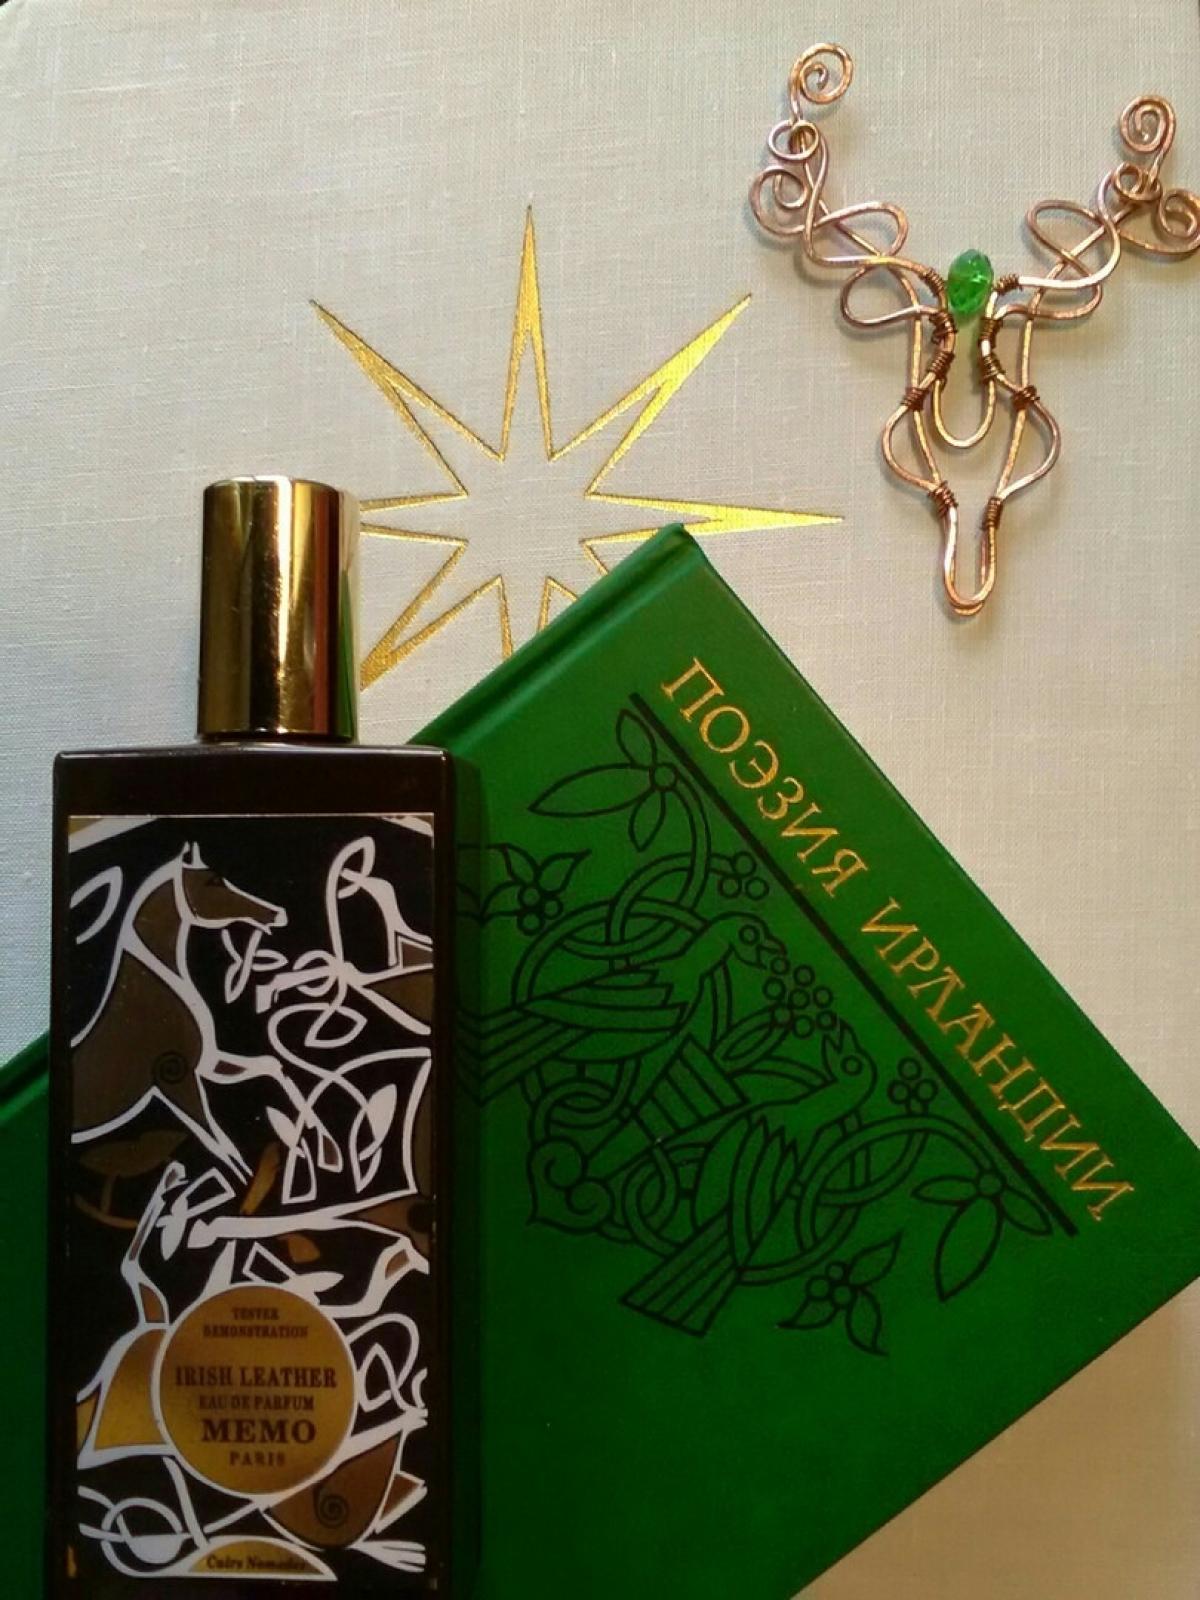 Irish Leather Memo Paris perfume - a fragrance for women ...